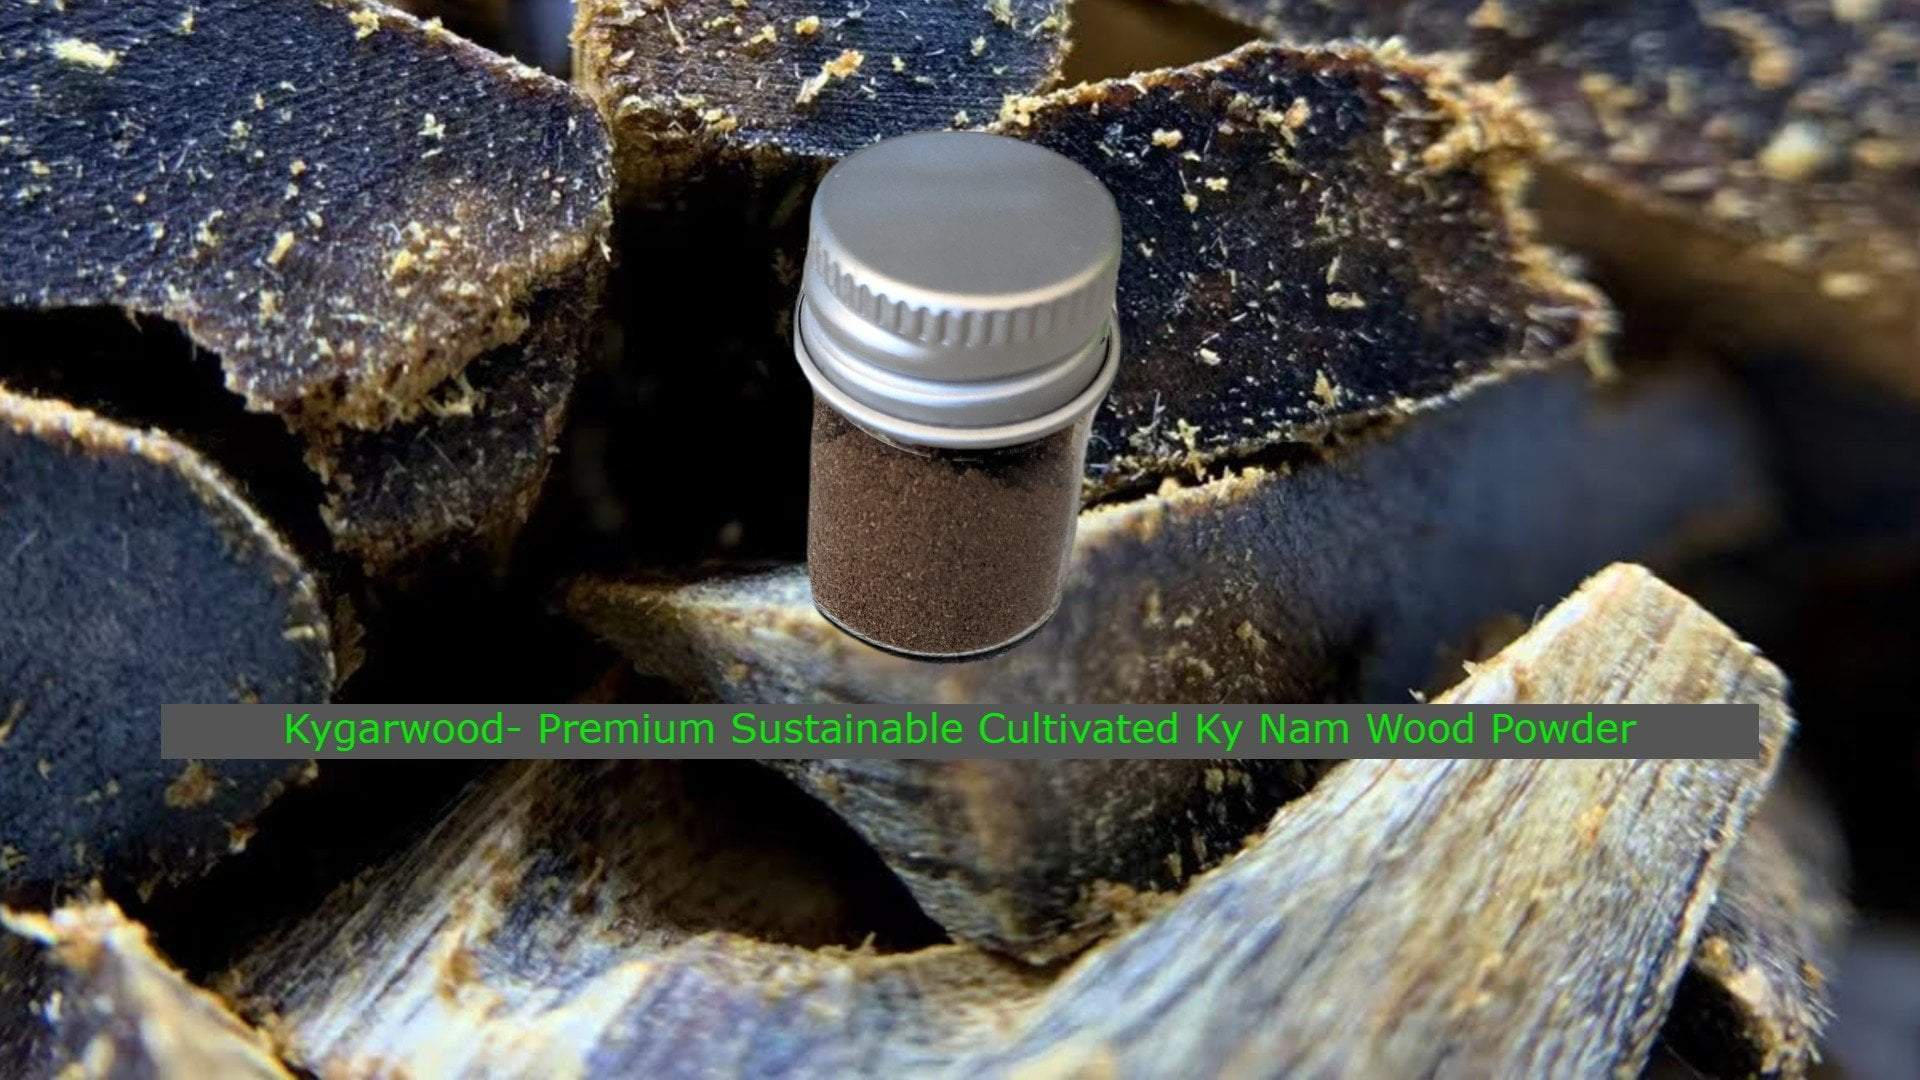 *New* Green Kygarwood Powder and Kygarwood chips- from Sustainable Premium Ky Nam Wood - Green Kygarwood Powder 1g